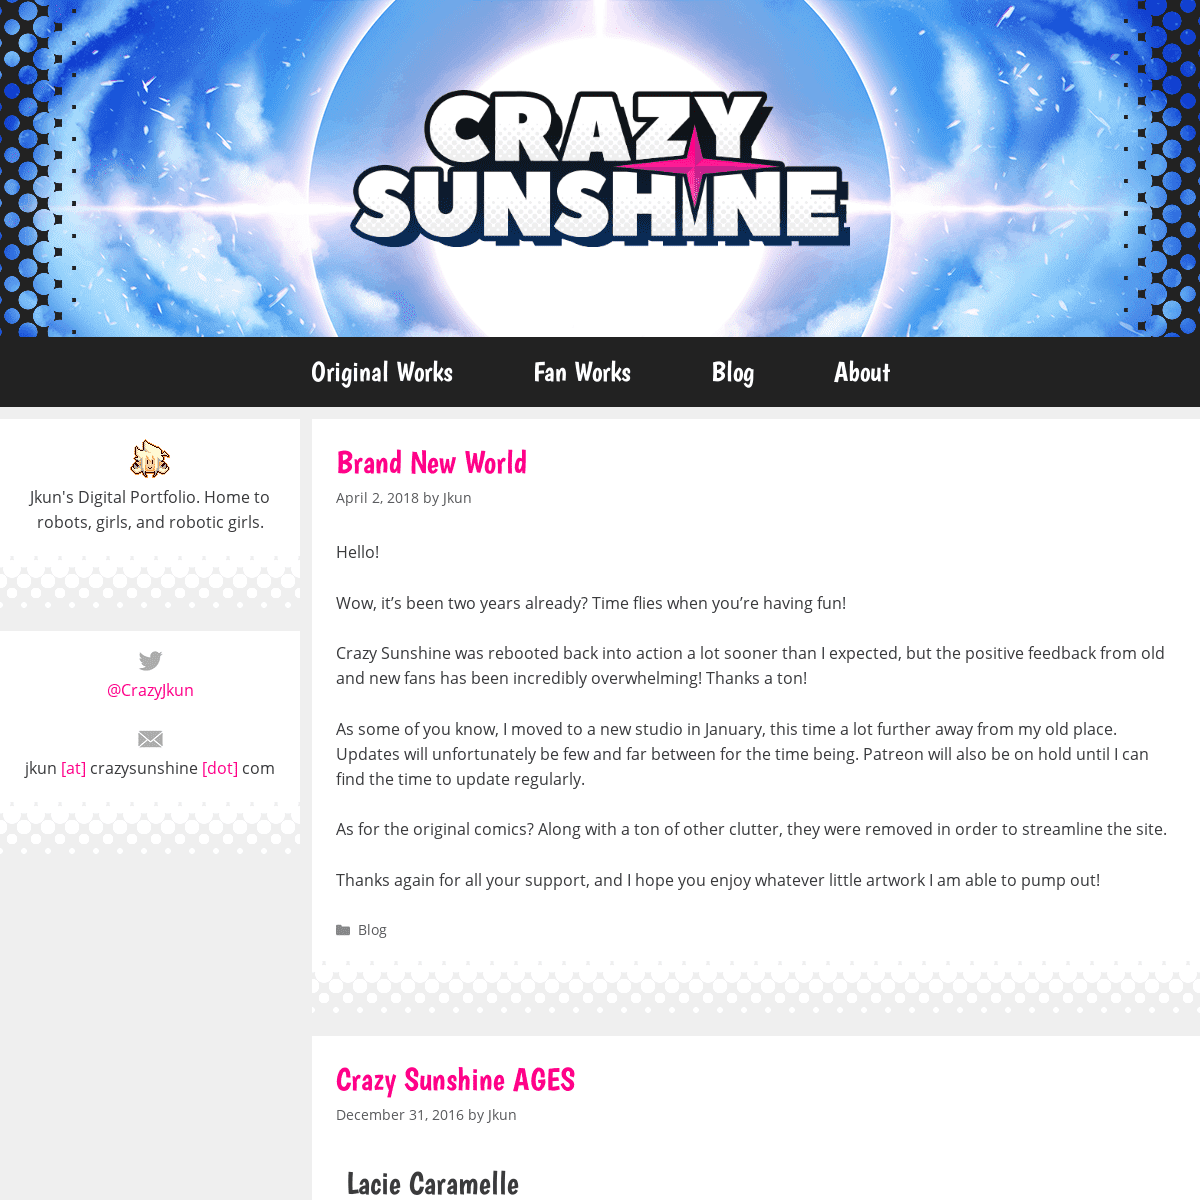 A complete backup of crazysunshine.com